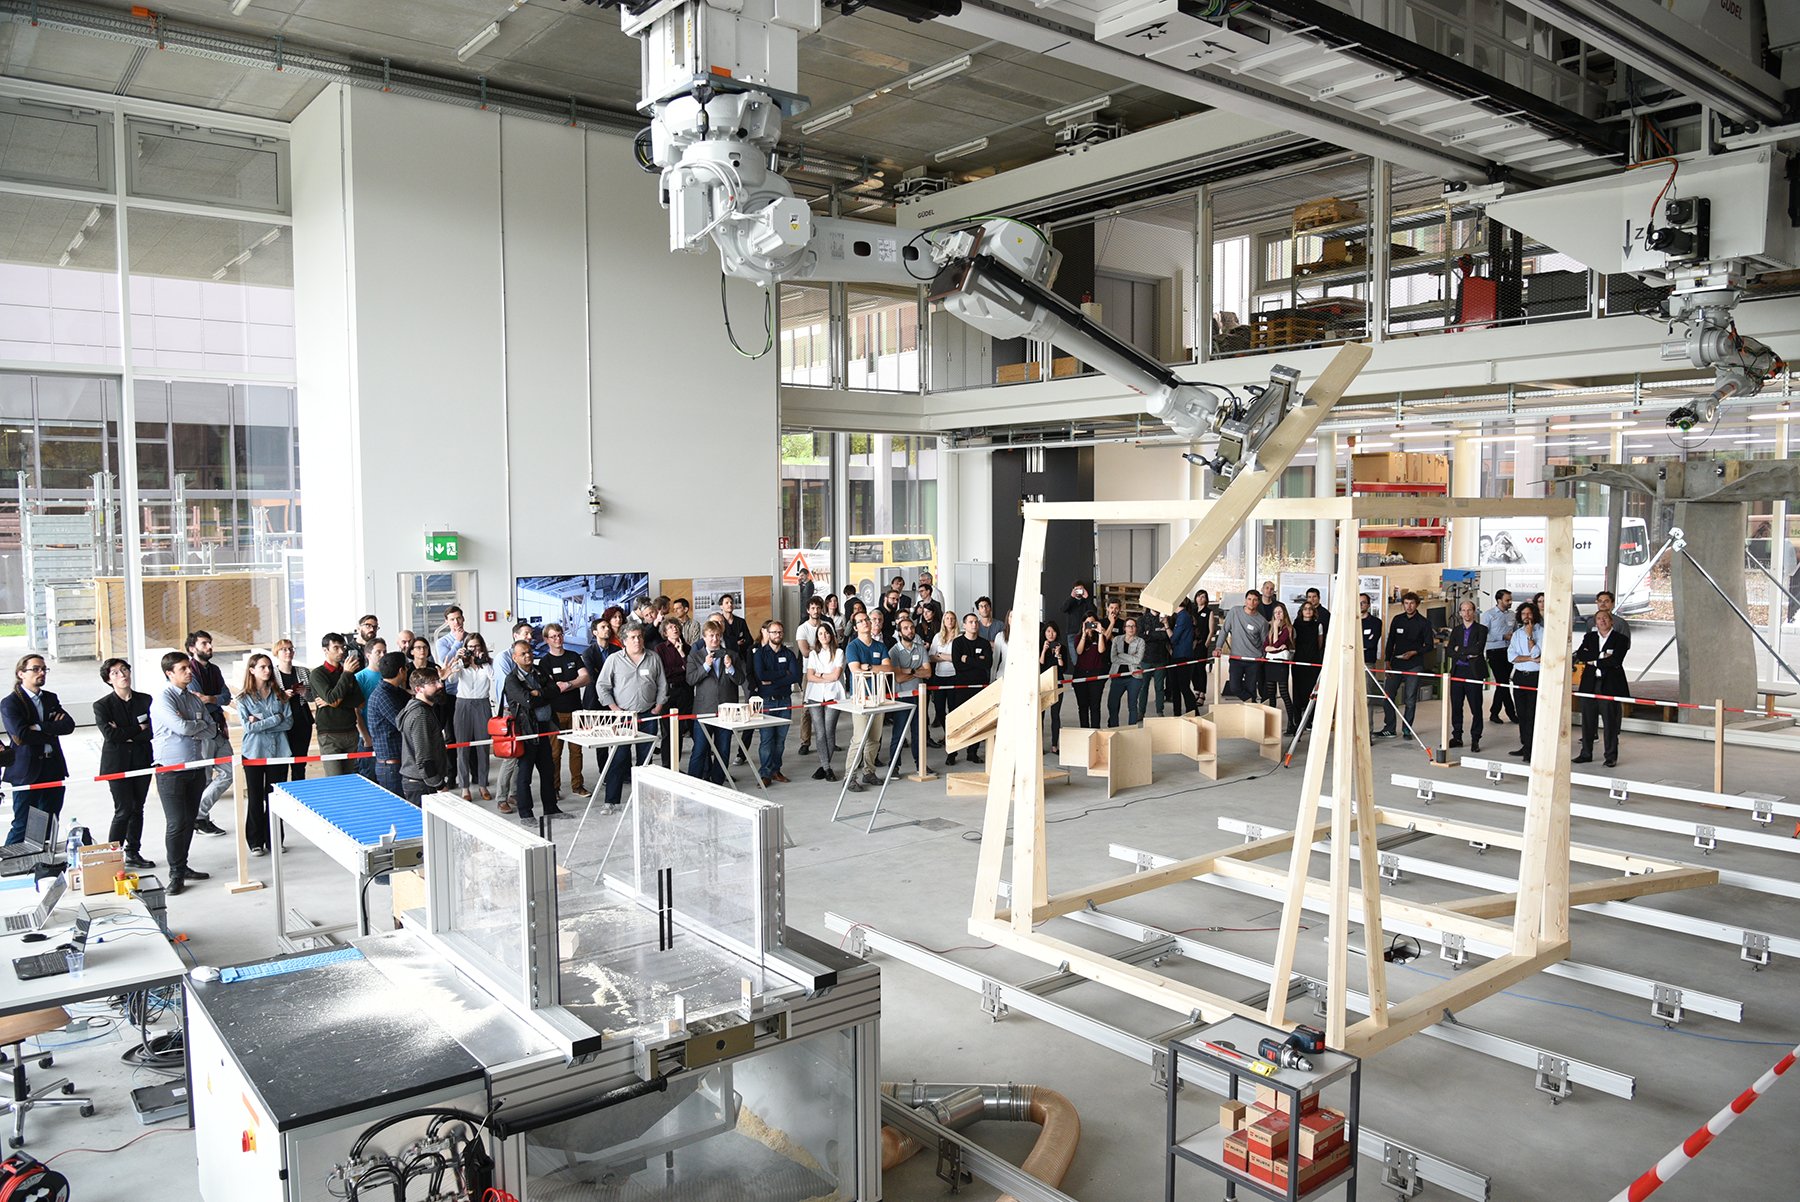 Randy Deutsch on Twitter: "The Robotic Fabrication Laboratory at Zurich in action https://t.co/QPgWIAiEbe #AEC #Robotics #Robots https://t.co/EVLoiHaKm6" / Twitter